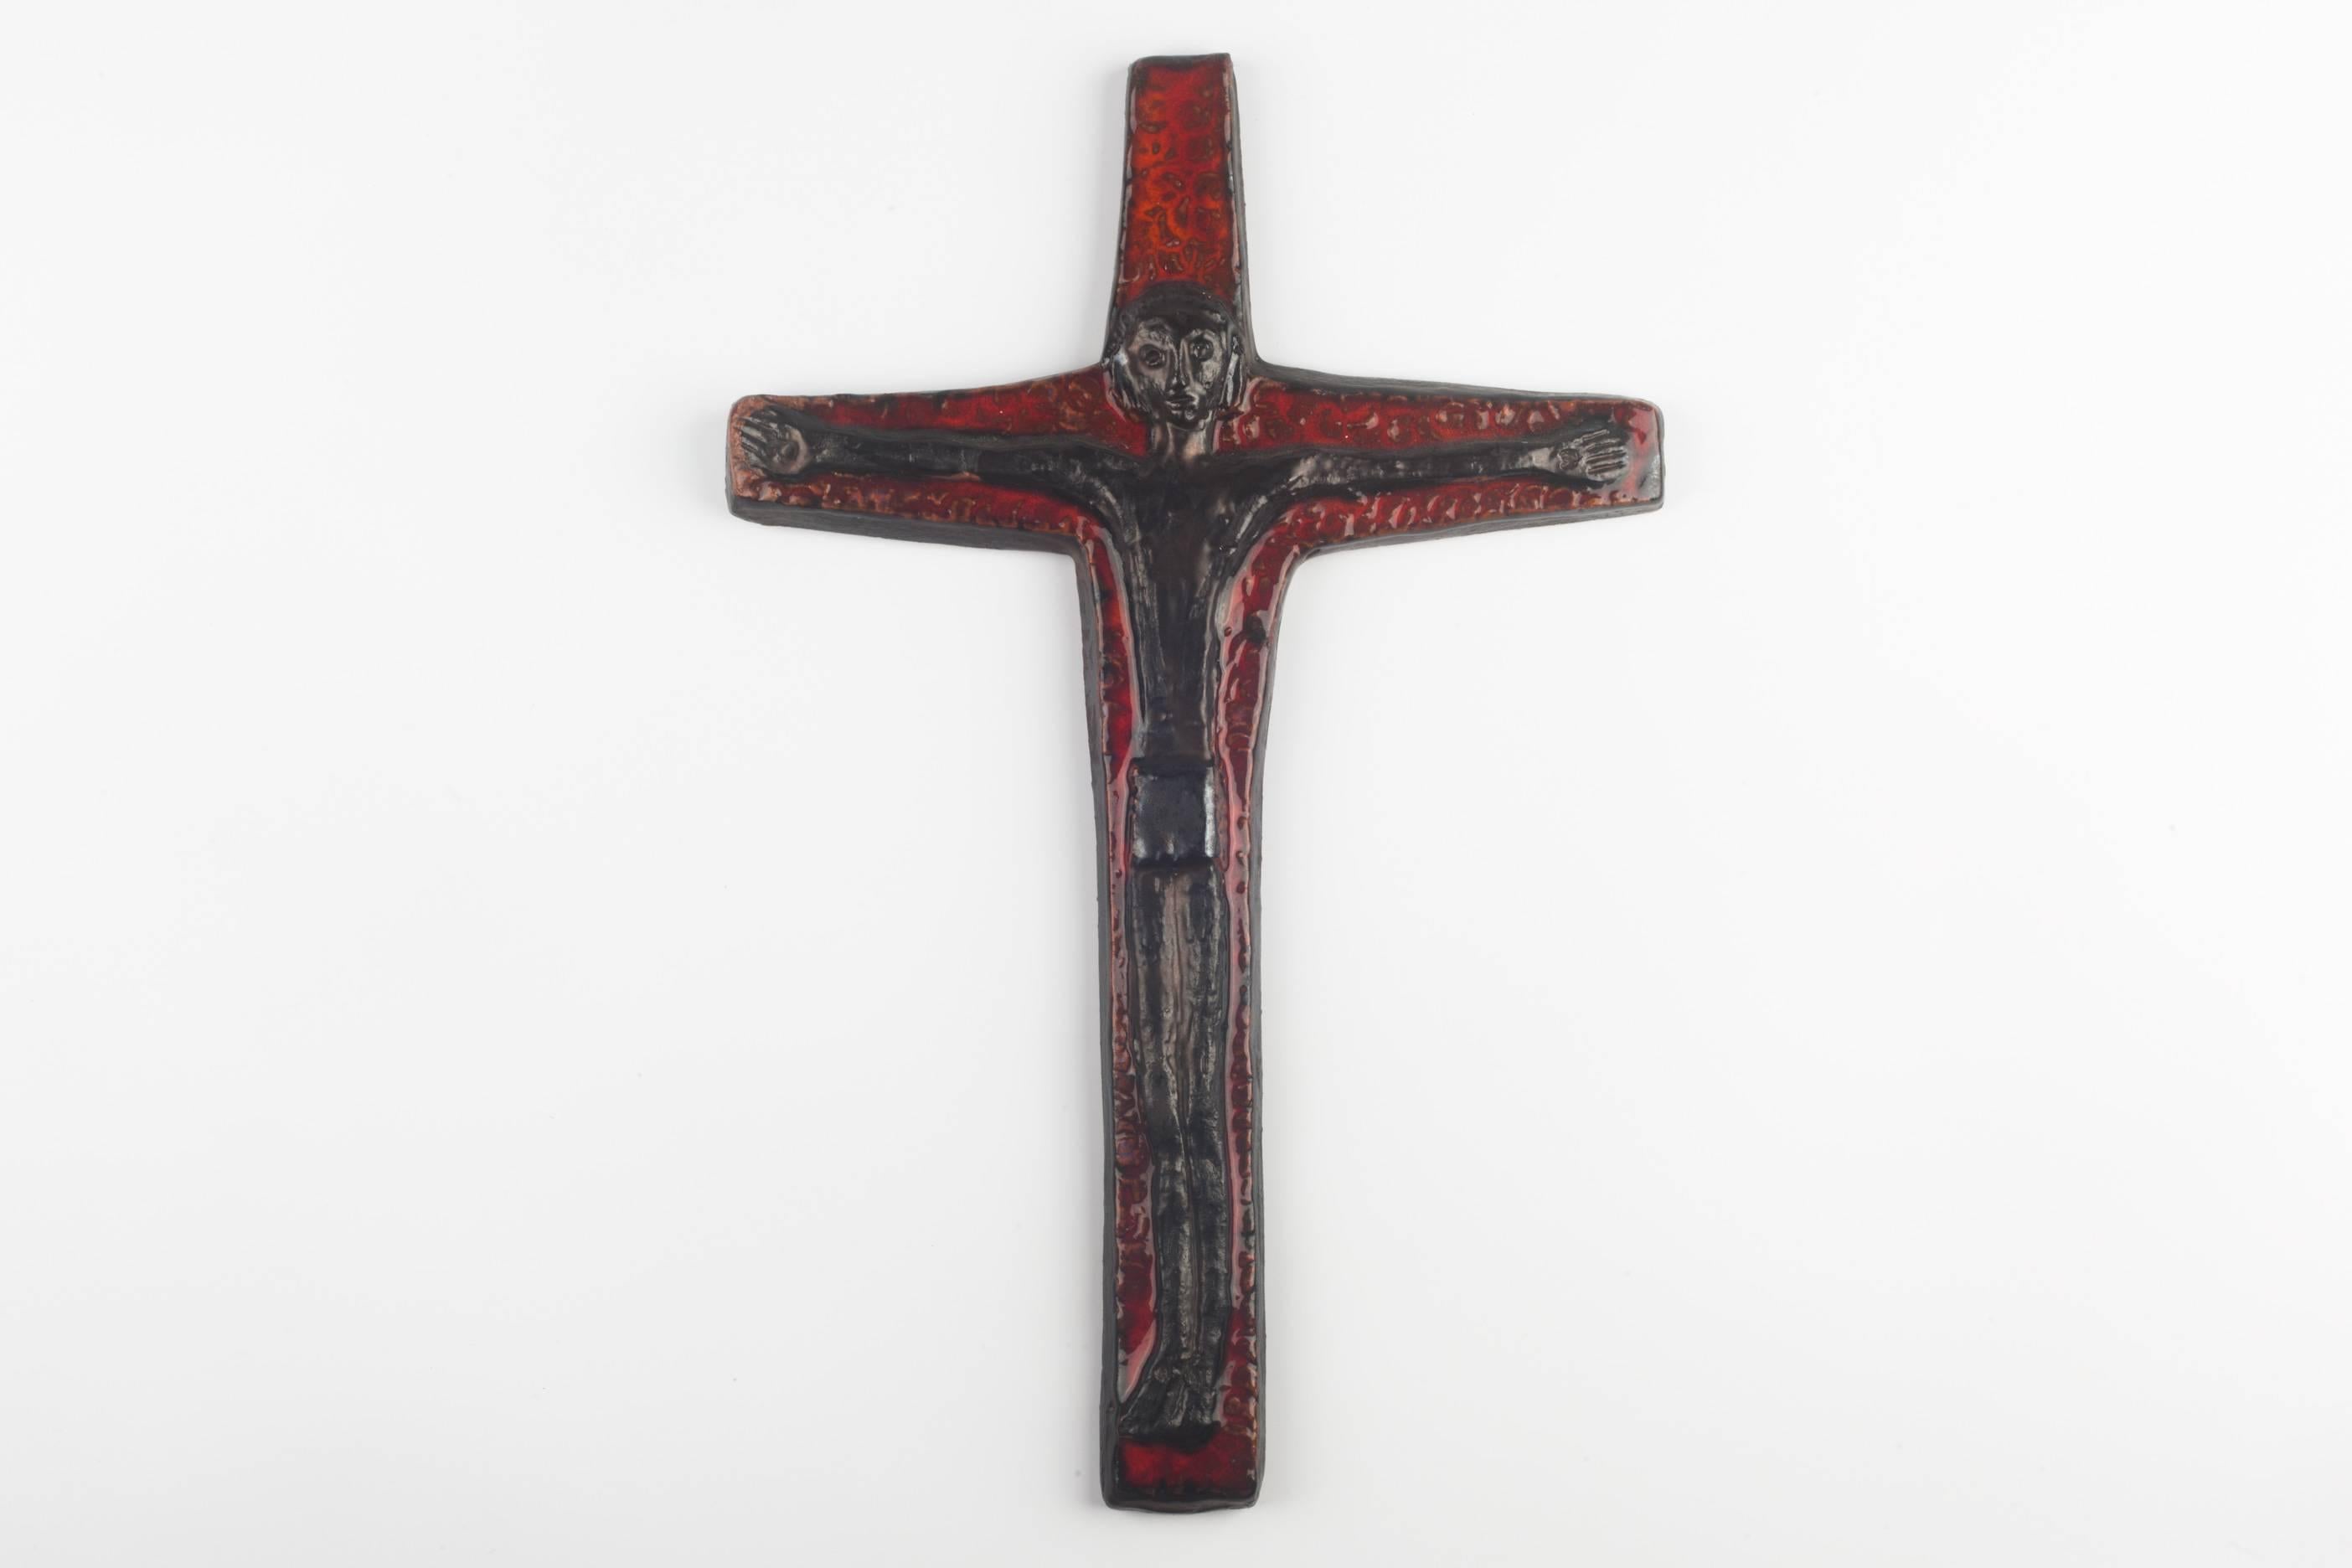 Adirondack Large Wall Cross, Red, Black Painted Ceramic, Handmade in Belgium, 1950s